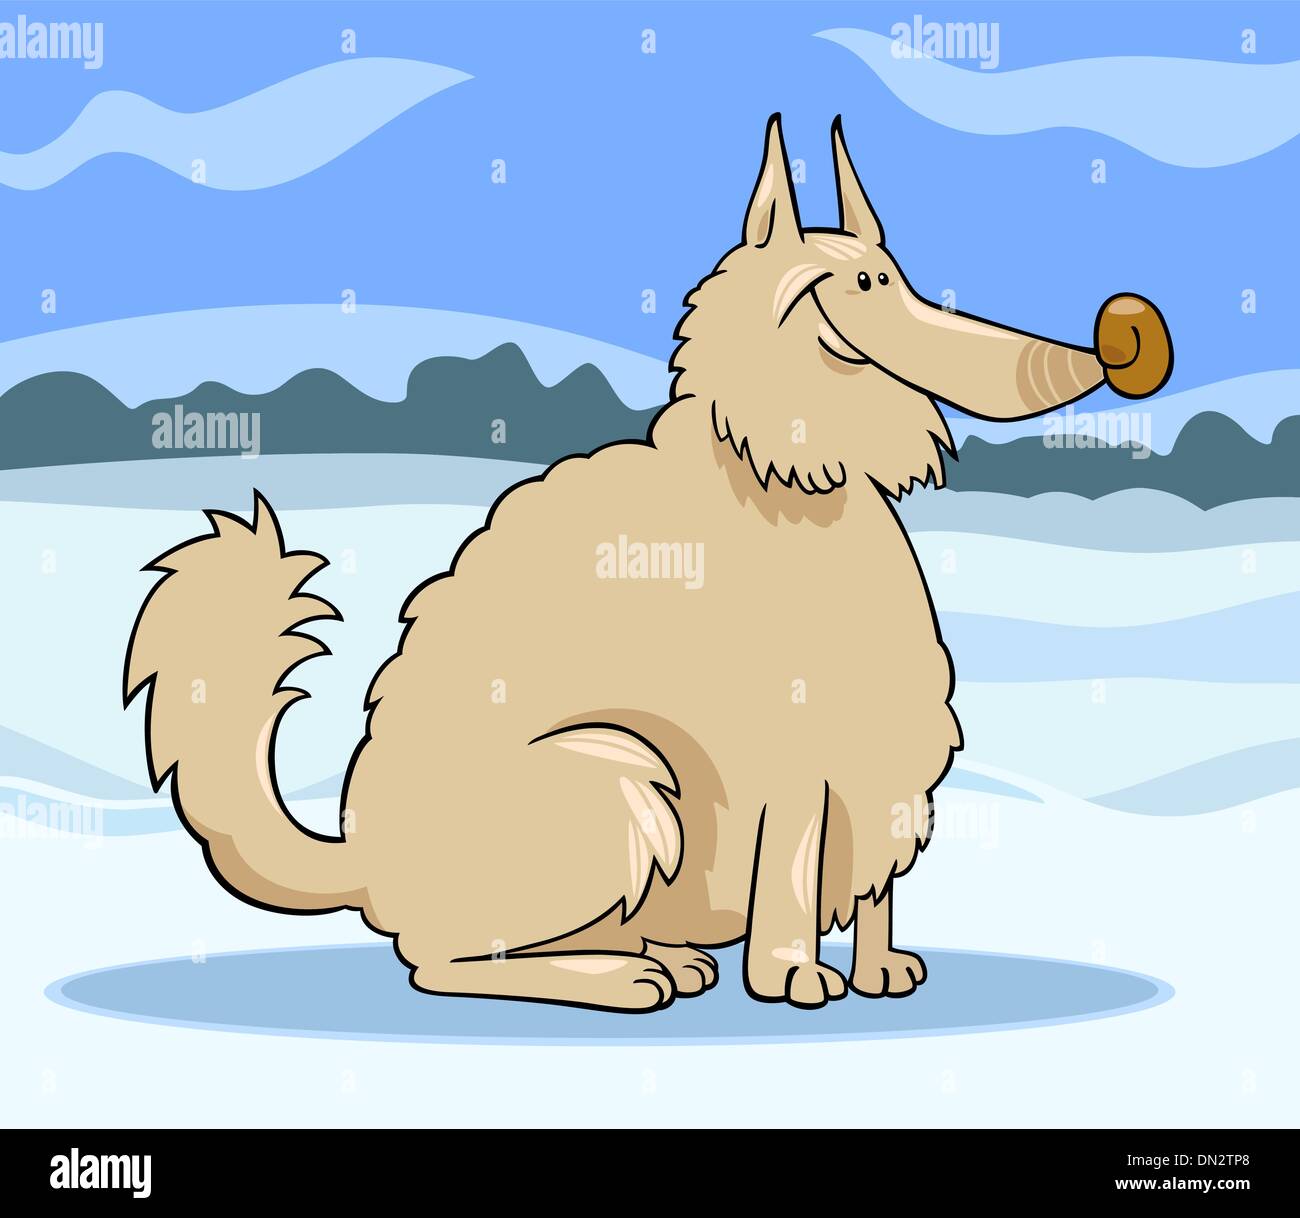 eskimo dog cartoon illustration Stock Vector